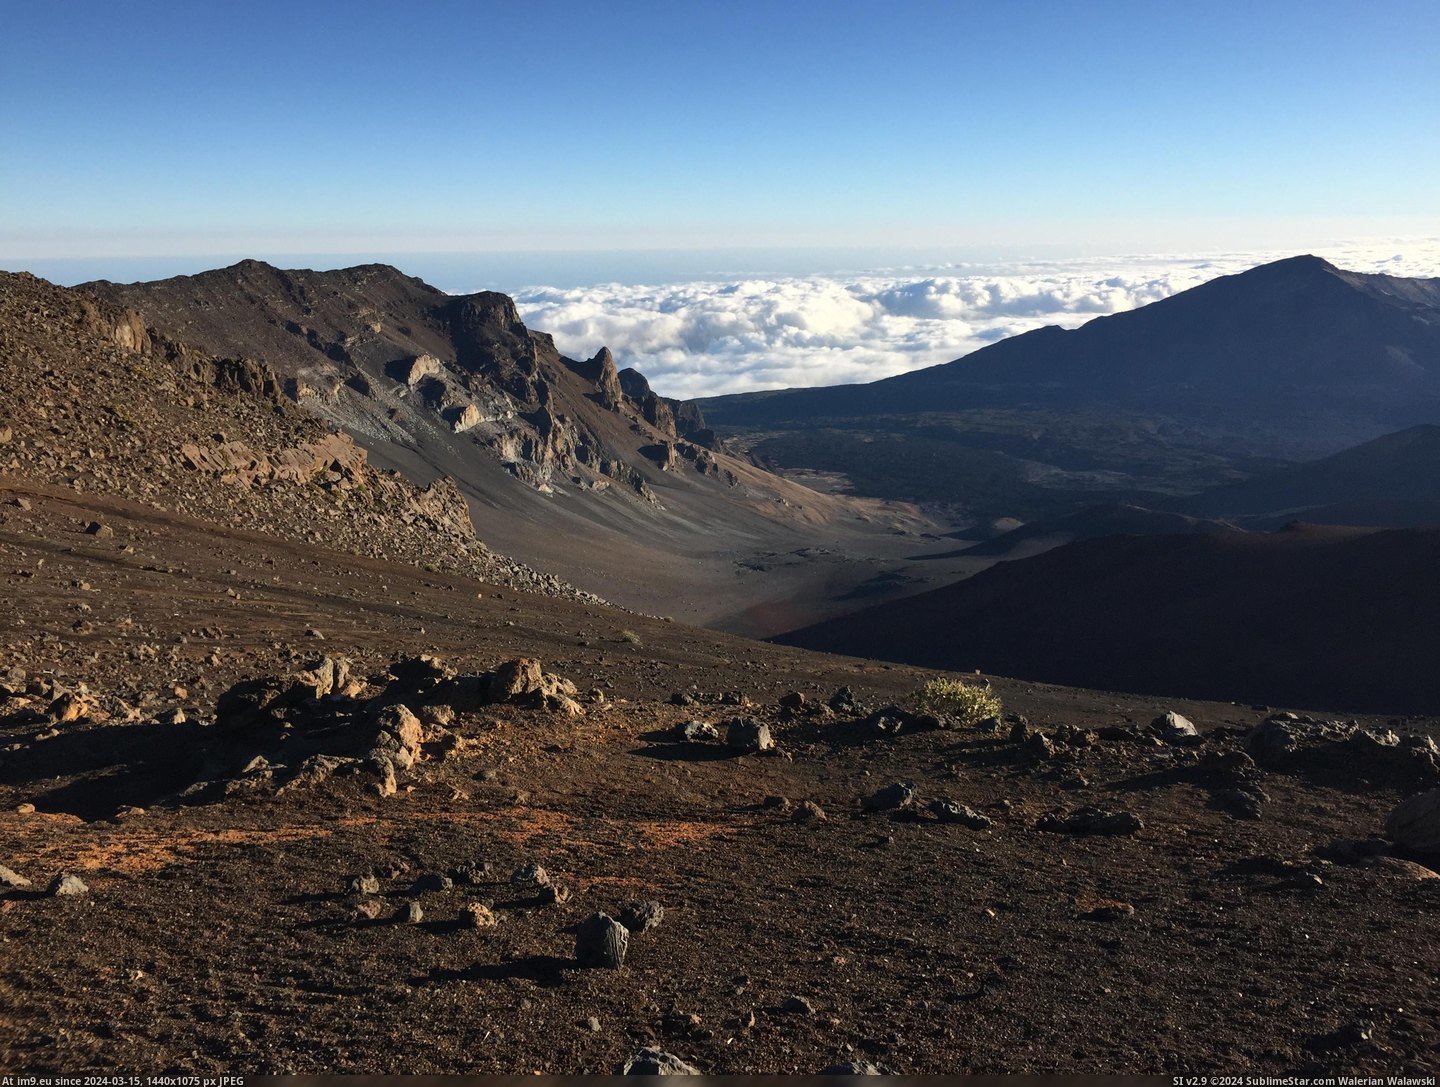 #3264x2448 #Feels #Crater #Maui #Haleakala #Hawaii #Mars [Earthporn] Feels like you are on Mars. Haleakala Crater, Maui, Hawaii.  [3264x2448] Pic. (Изображение из альбом My r/EARTHPORN favs))